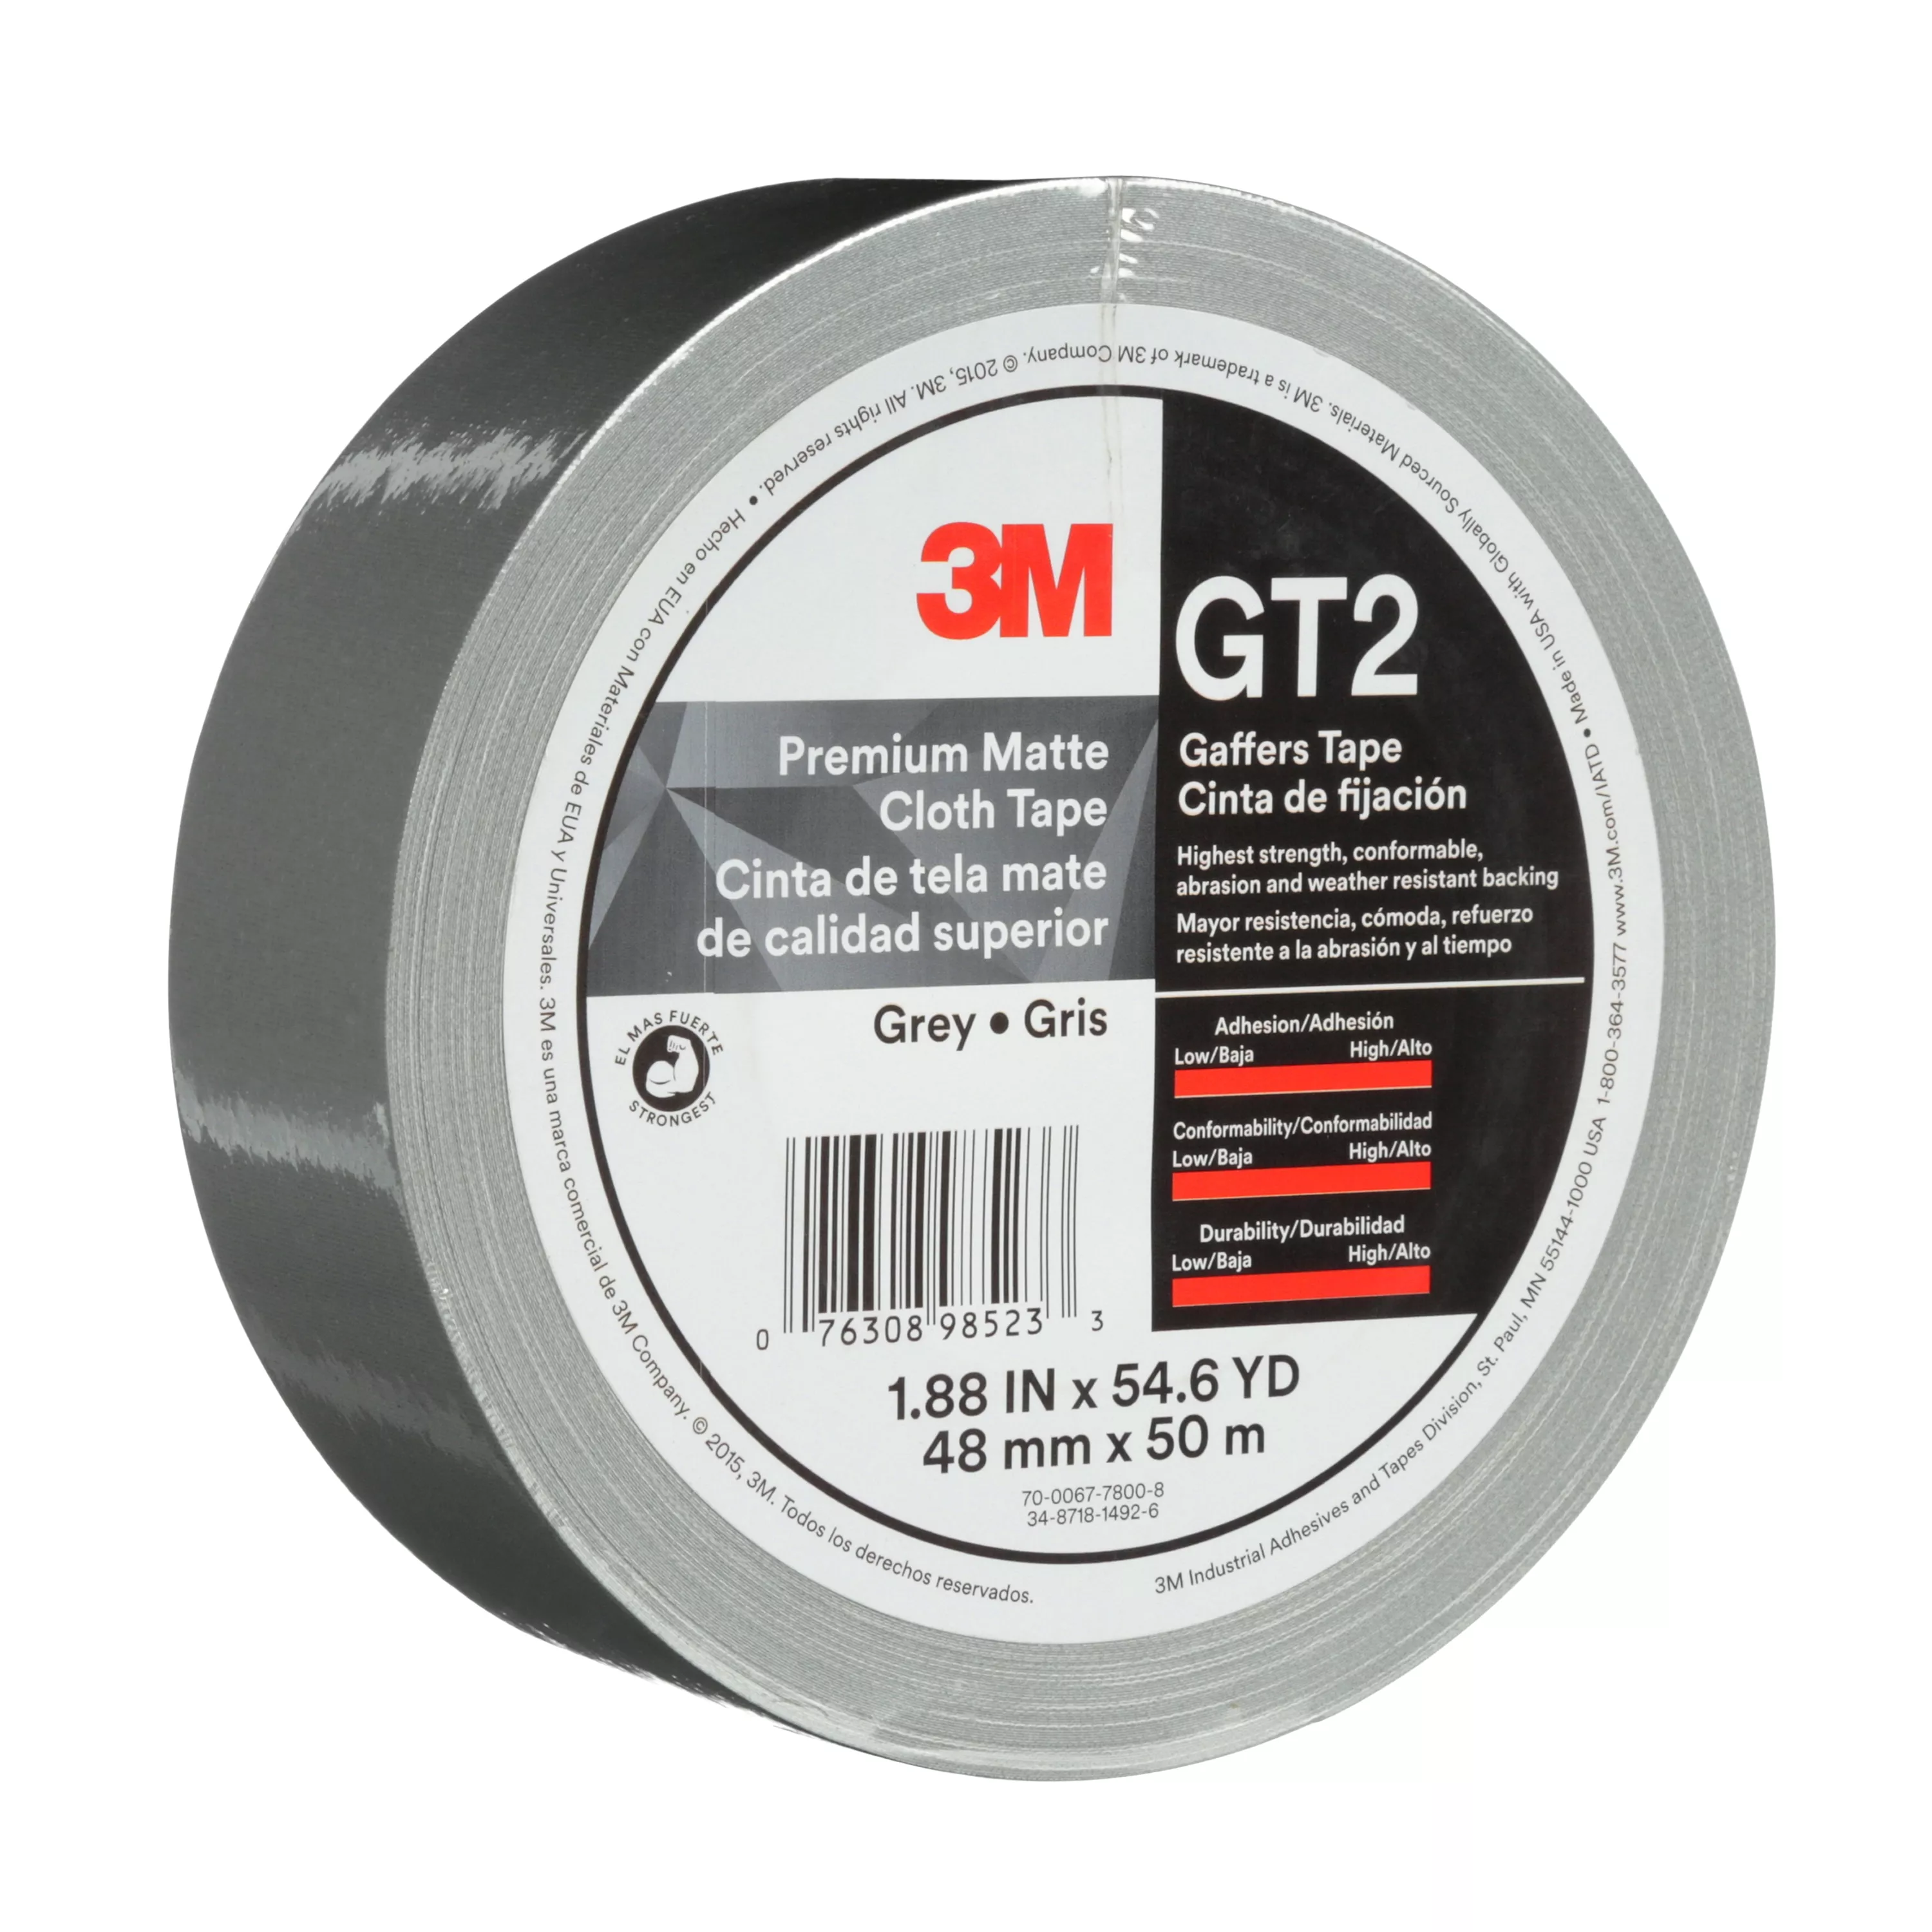 3M™ Premium Matte Cloth (Gaffers) Tape GT2, Grey, 48 mm x 50 m, 11 mil,
24/Case